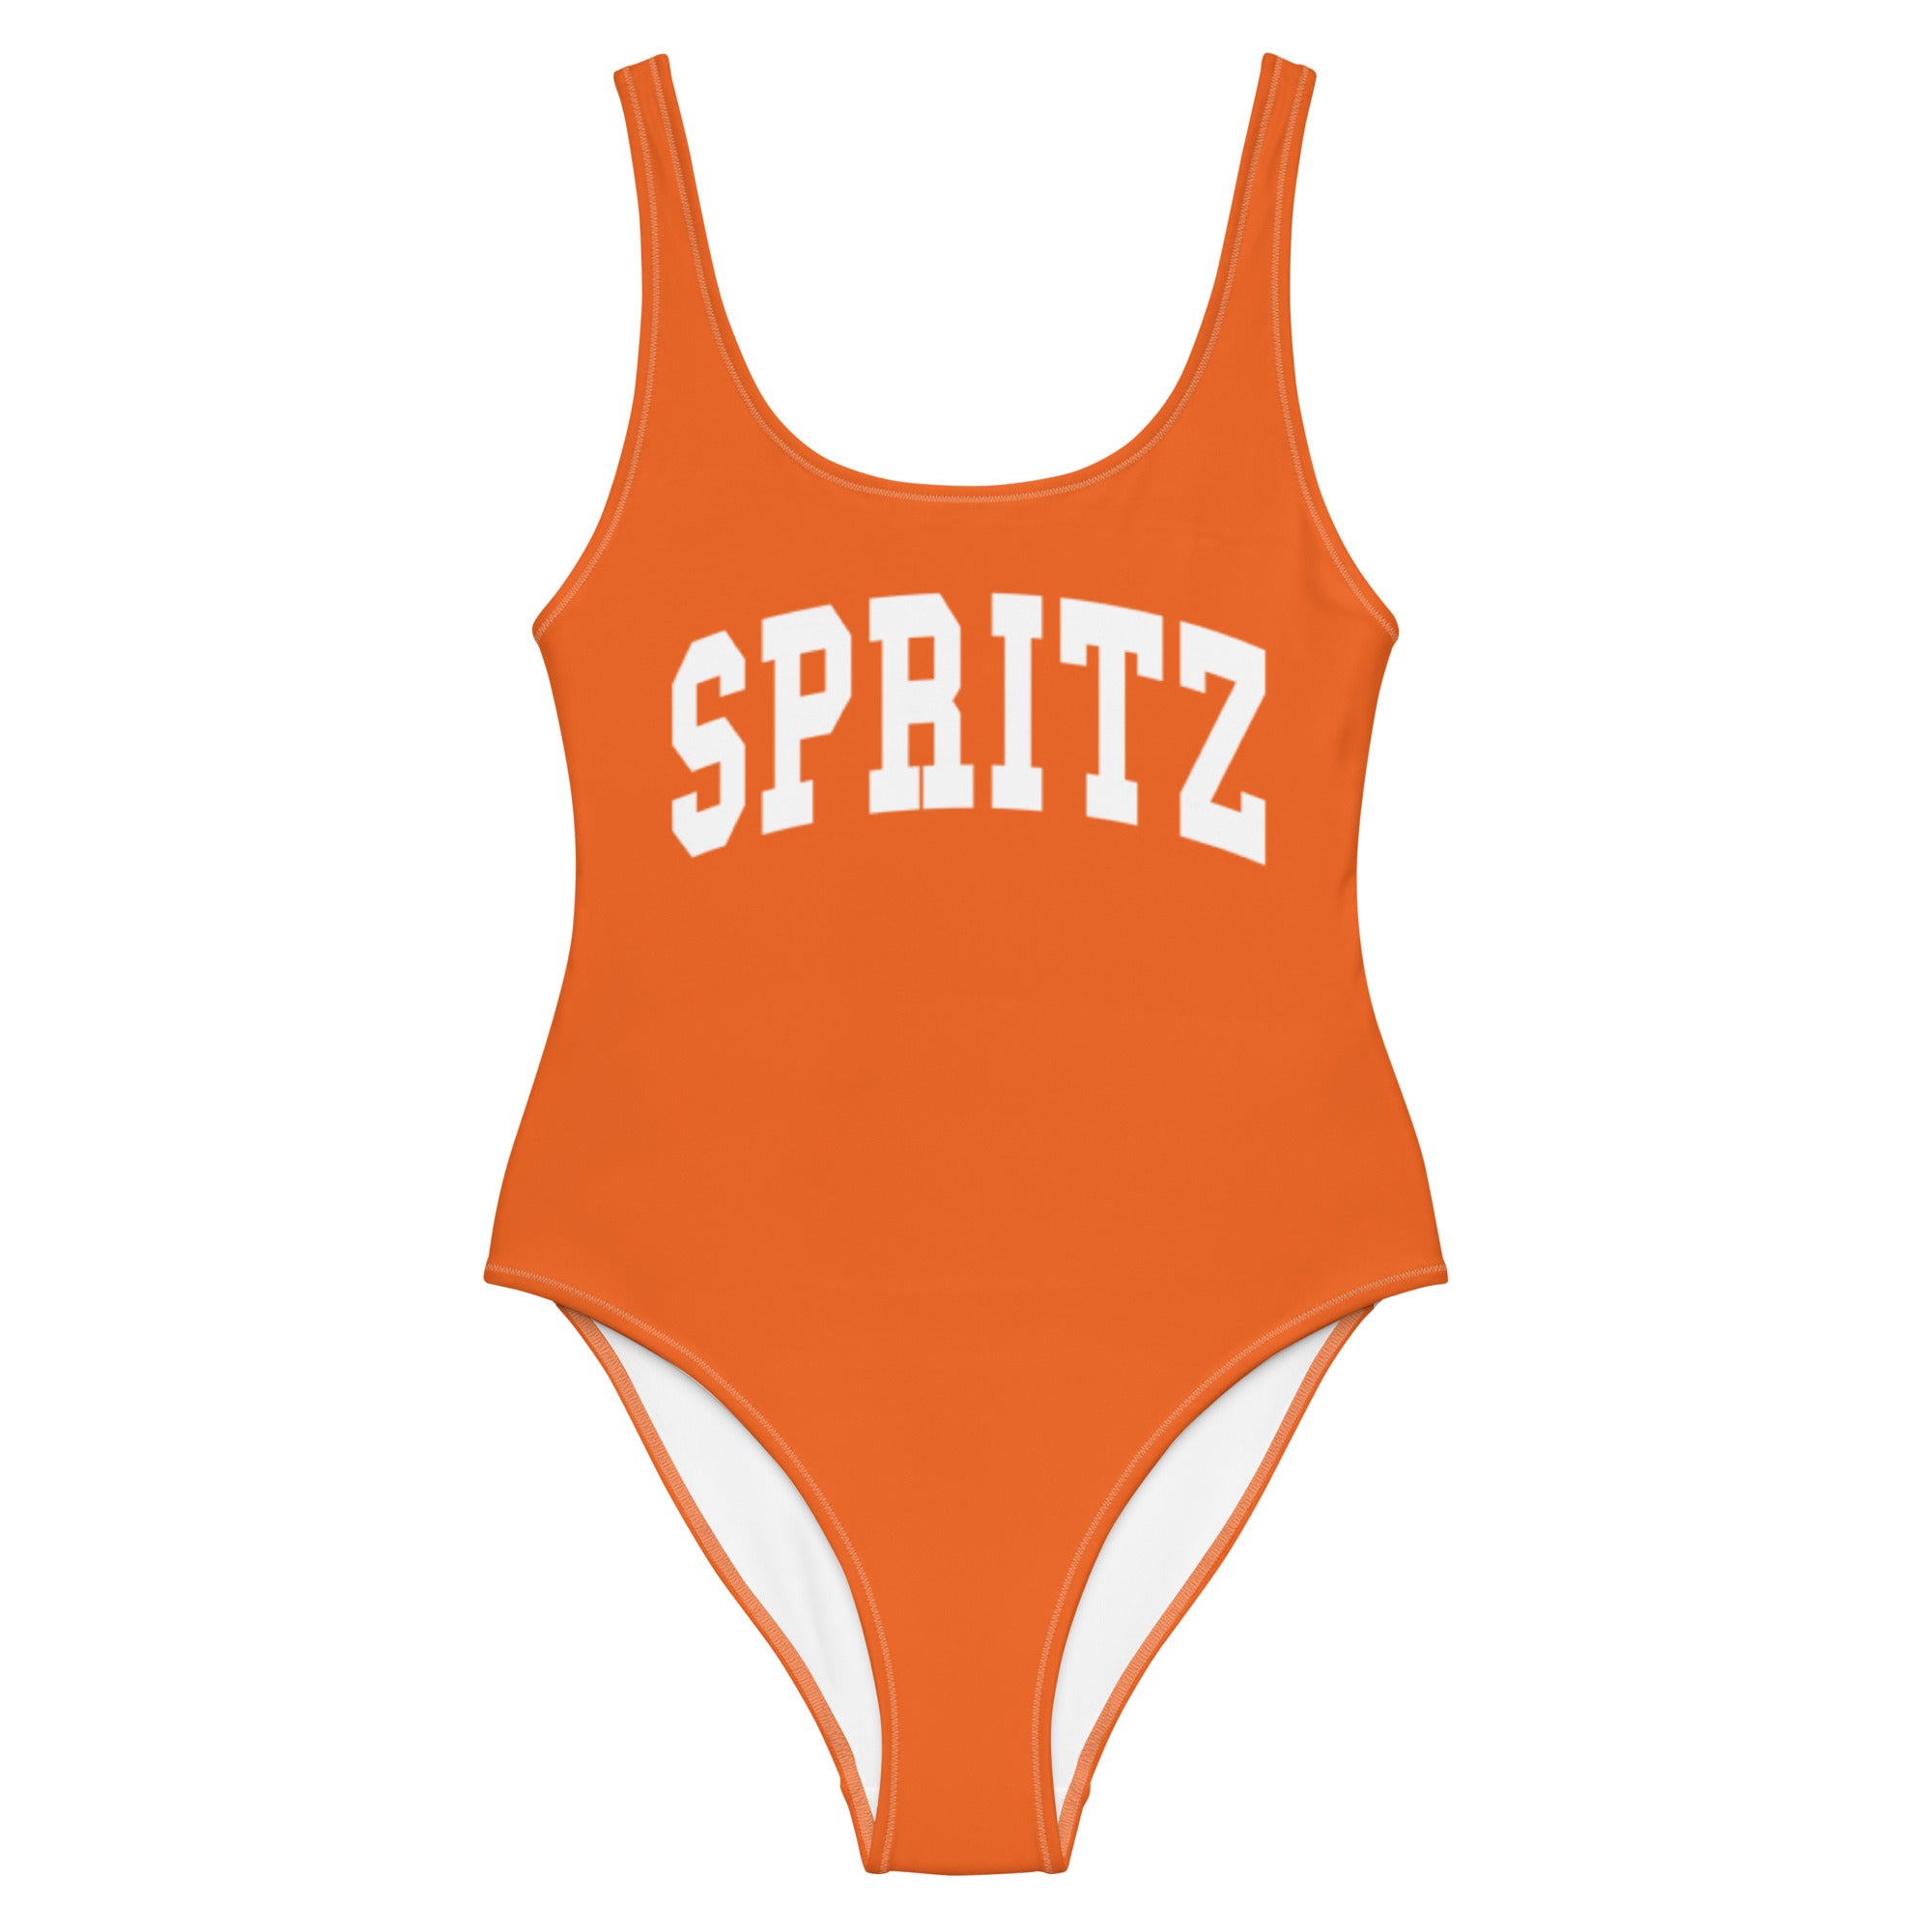 Spritz - Swimsuit